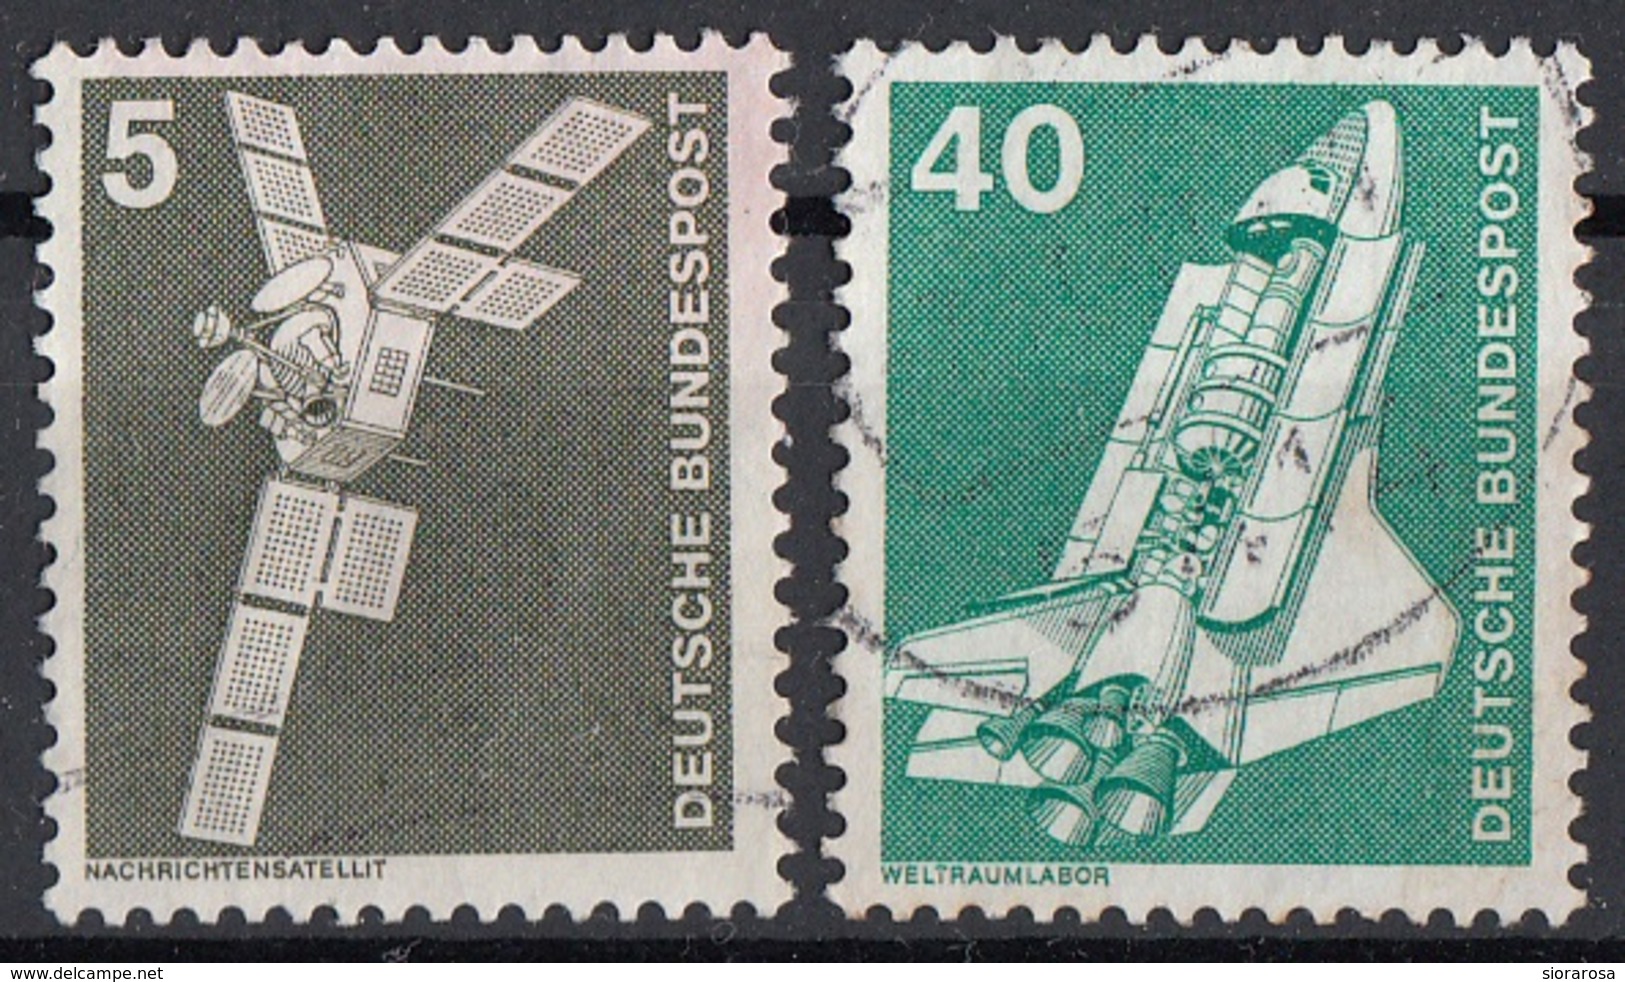 Germania 1975 Sc. 1170-1174 Industria Tecnica : Satellite - Space Shuttle - Germany Used - Europe